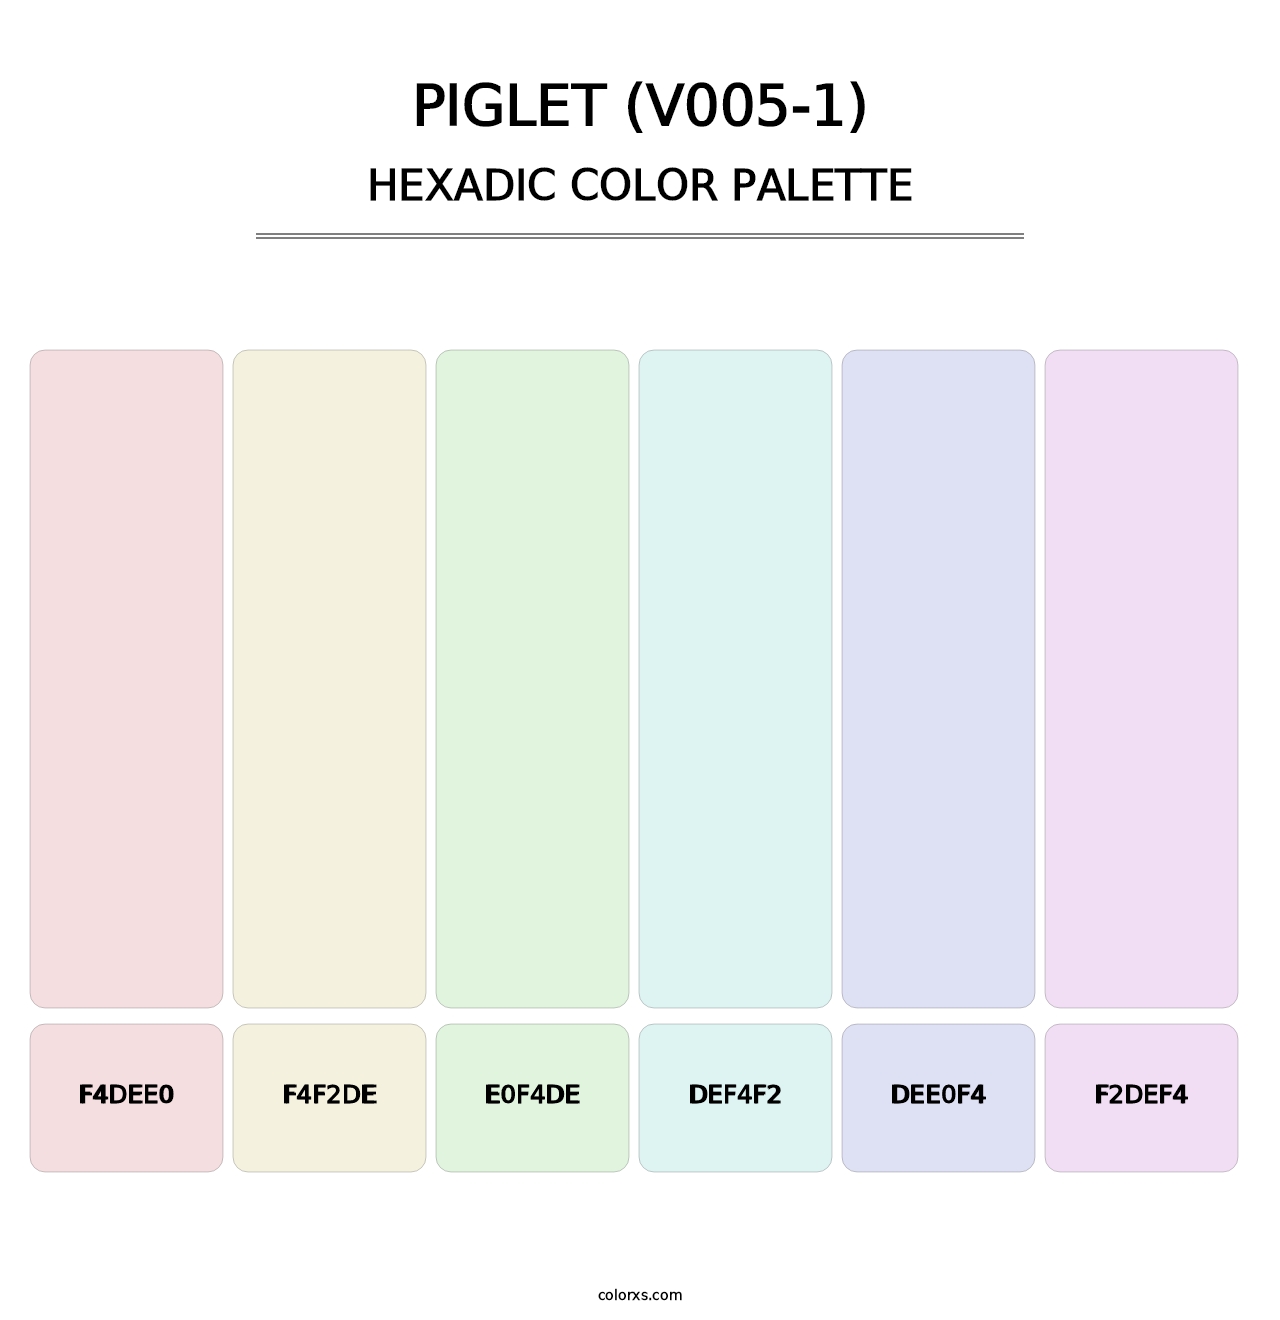 Piglet (V005-1) - Hexadic Color Palette